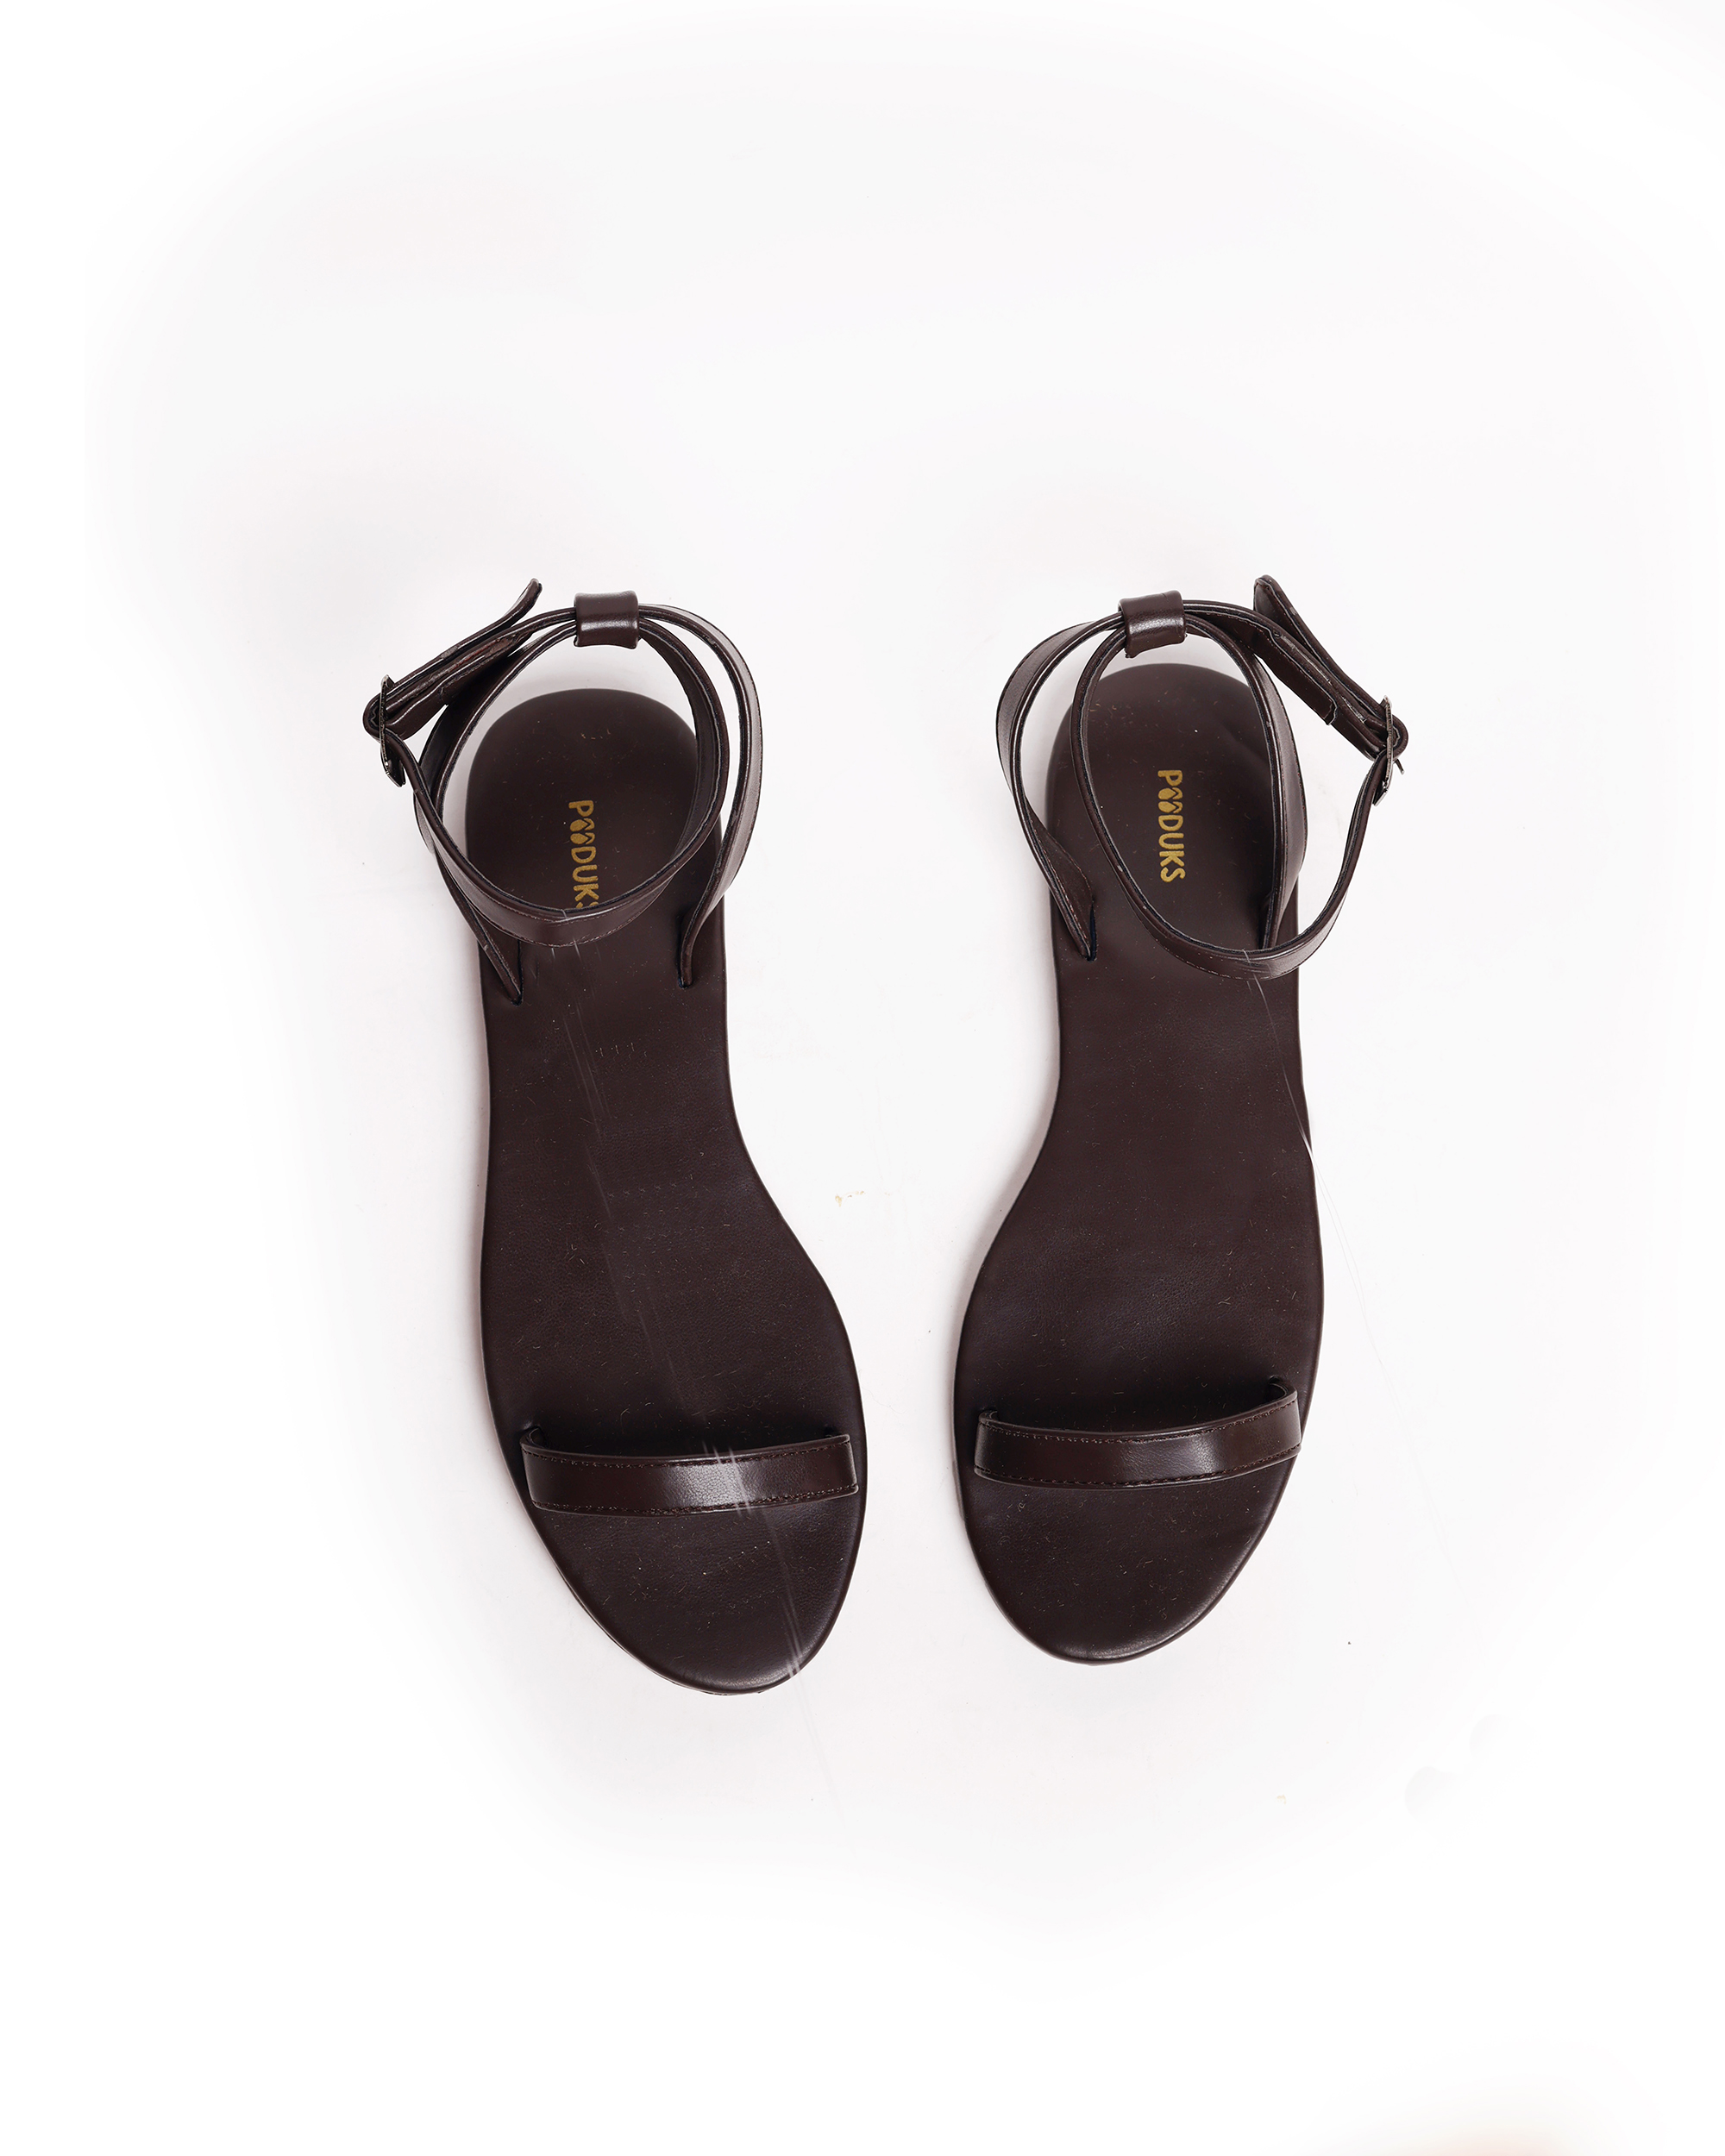 Paaduks Cho Dark Brown Flat Sandals For Women - Orgo All-Natural